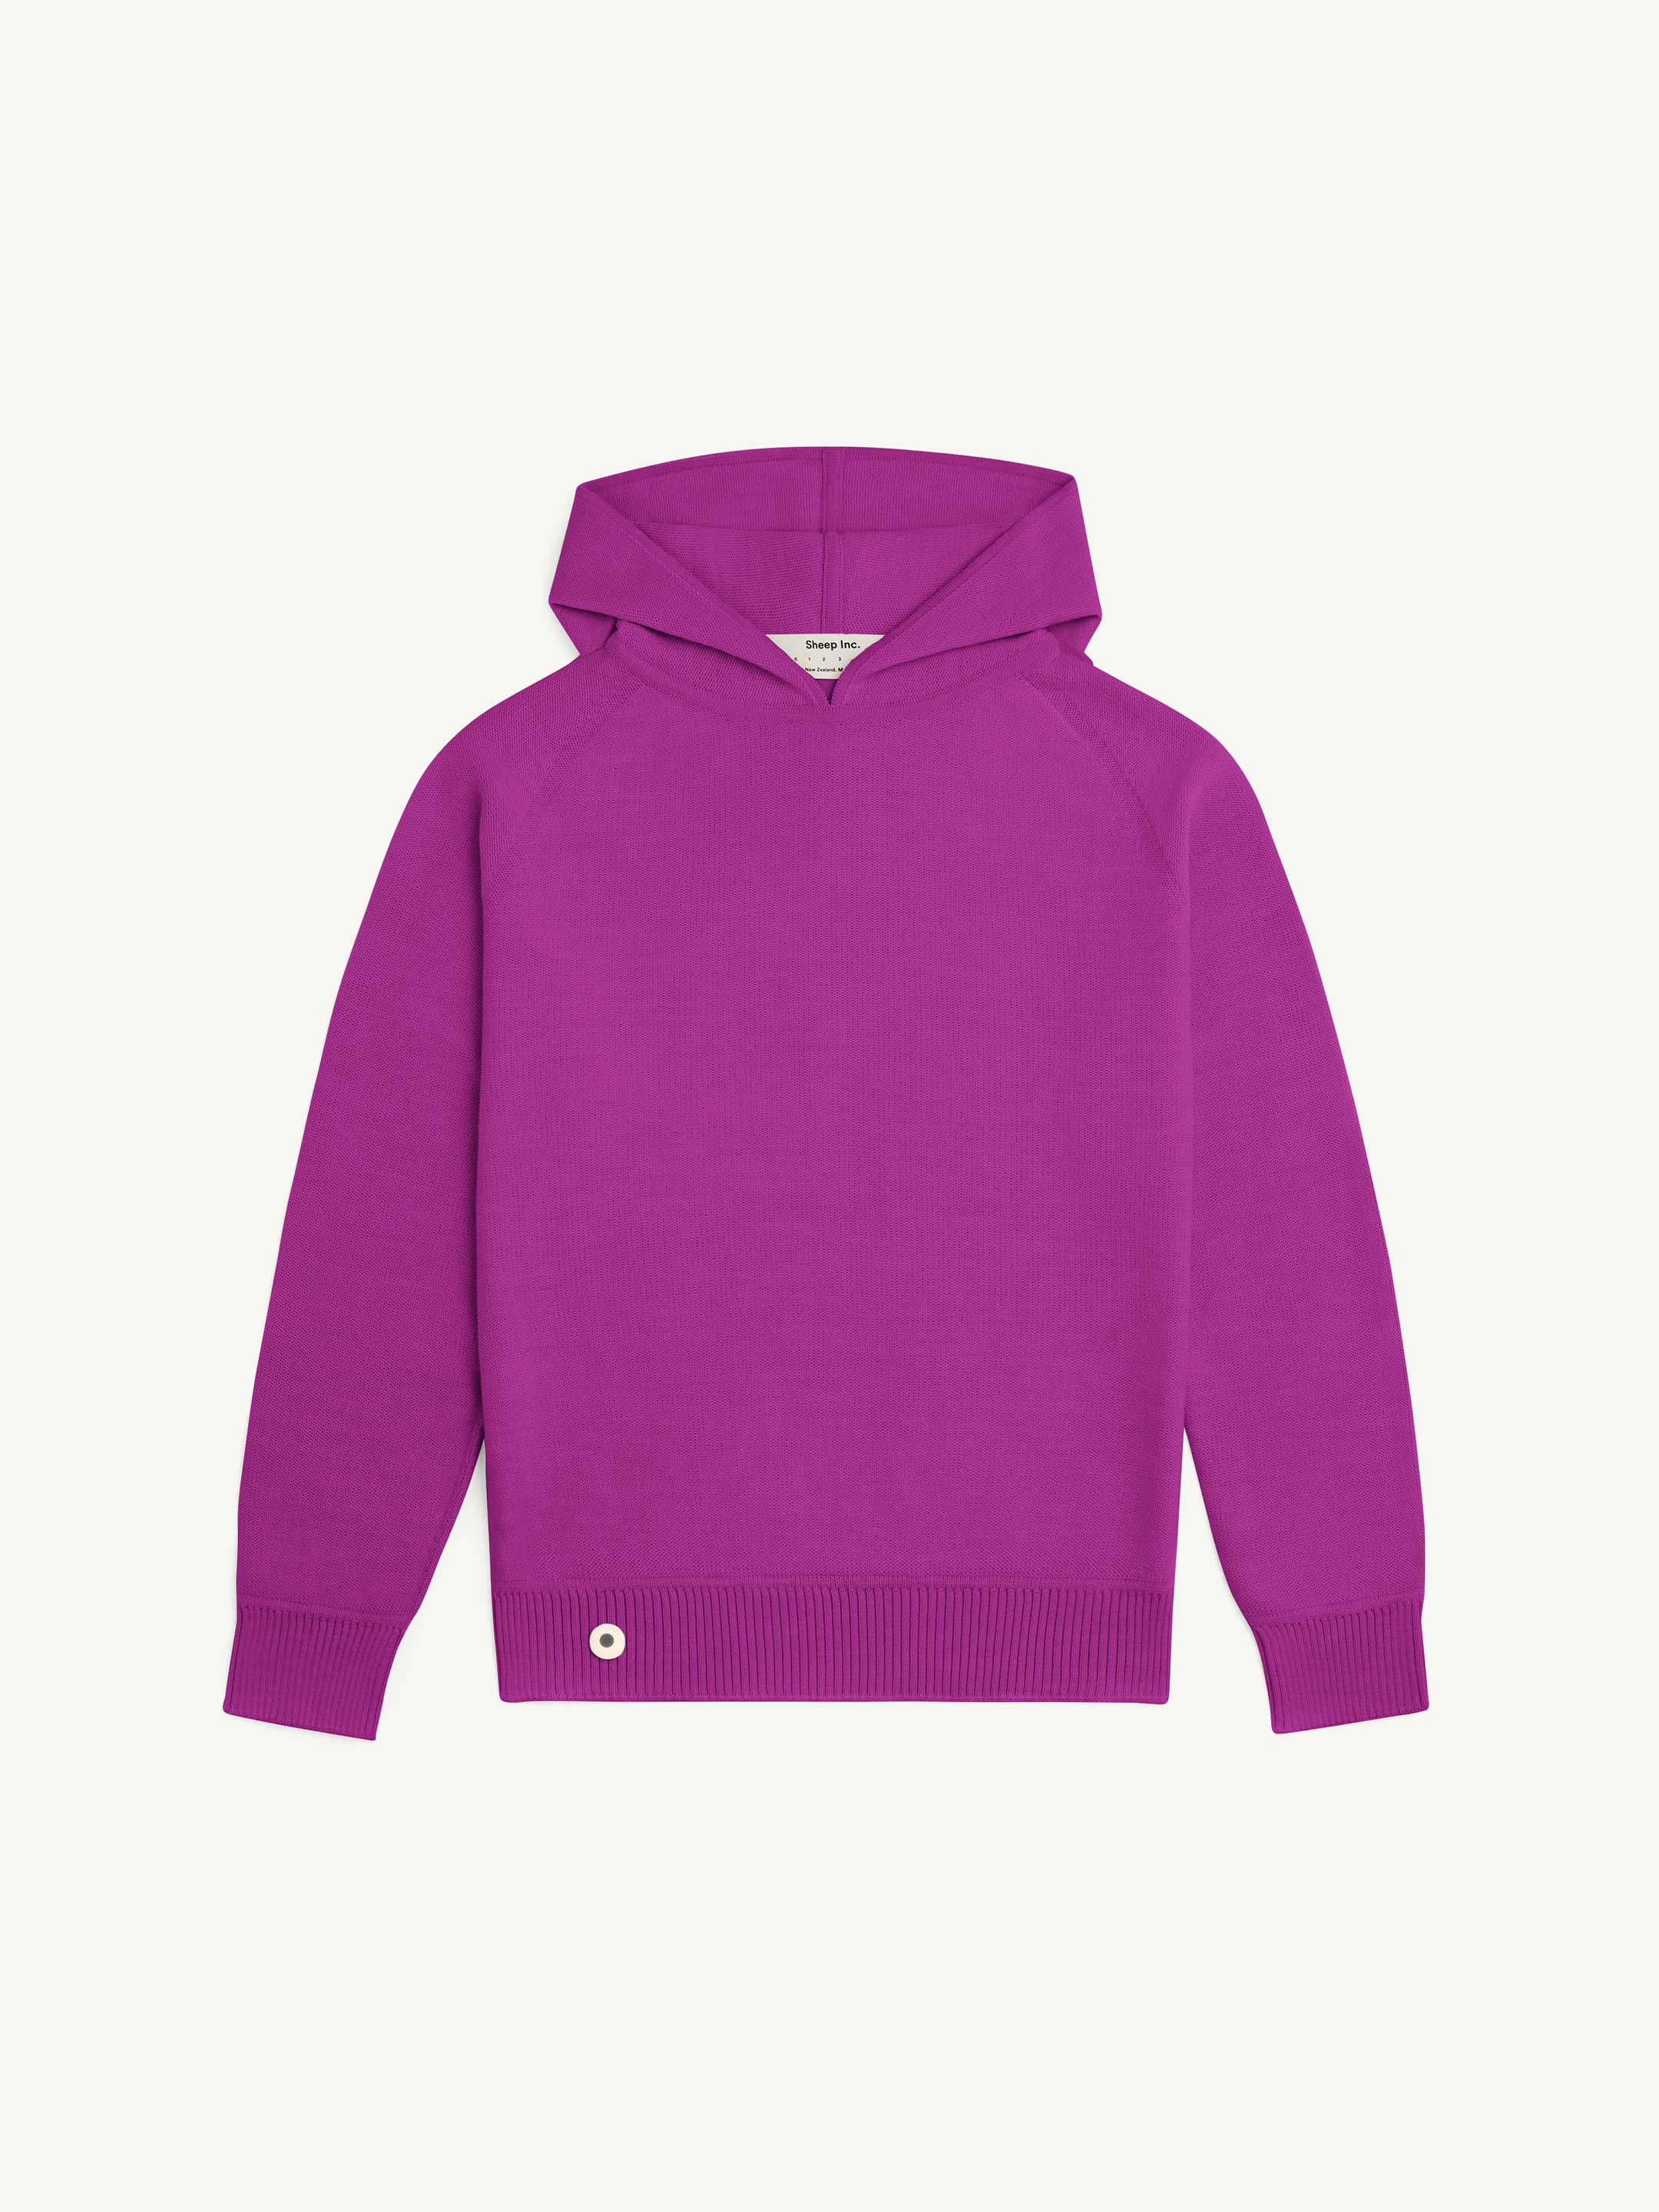 Ladies Sweatshirt Size 10 to 28 Unisex Loose Fit Premium Plain NEW